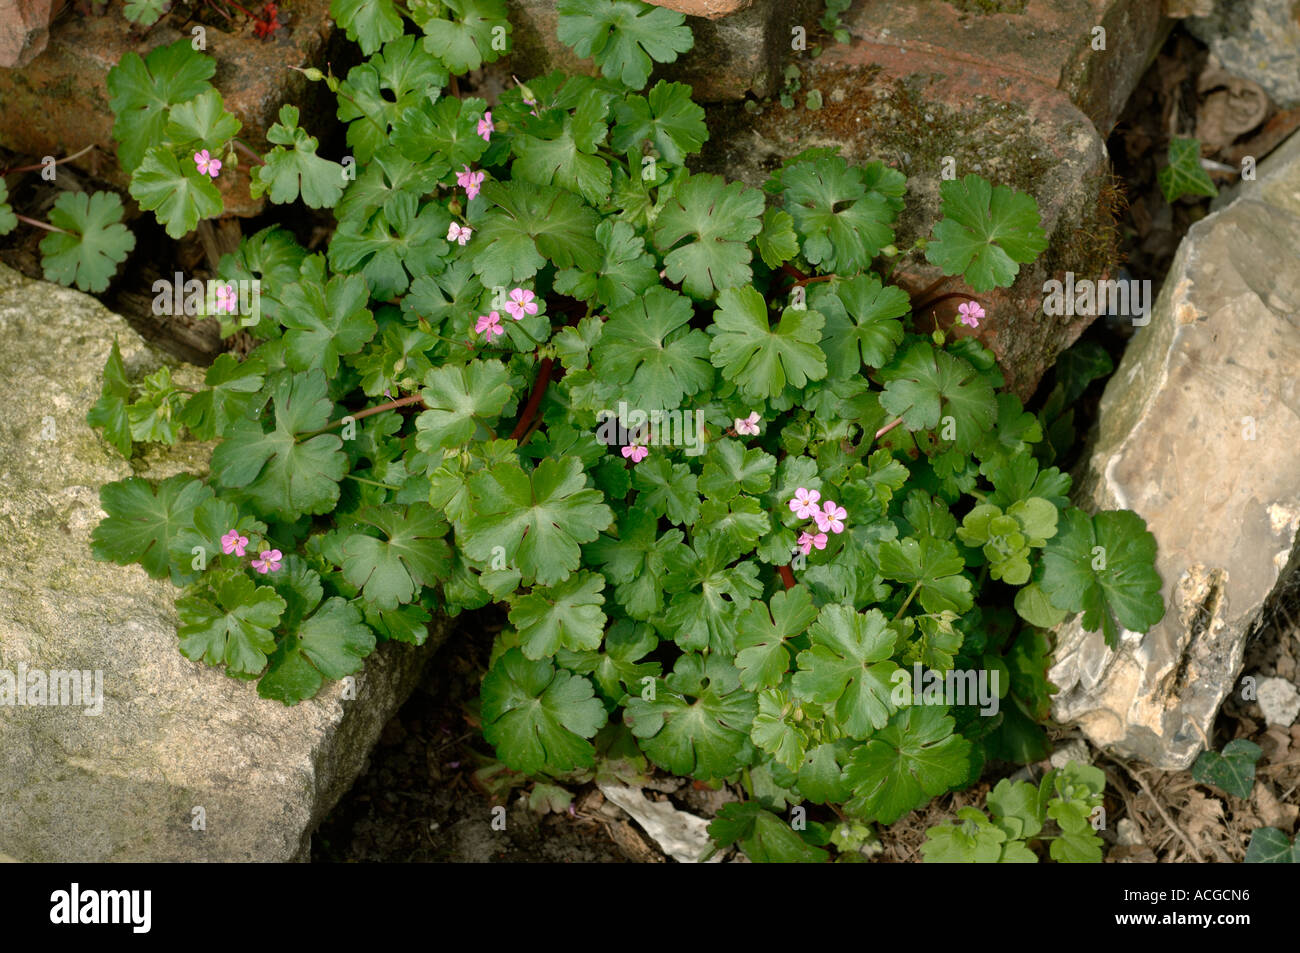 Herb robert Geranium robertianum flowering in waste ground Stock Photo